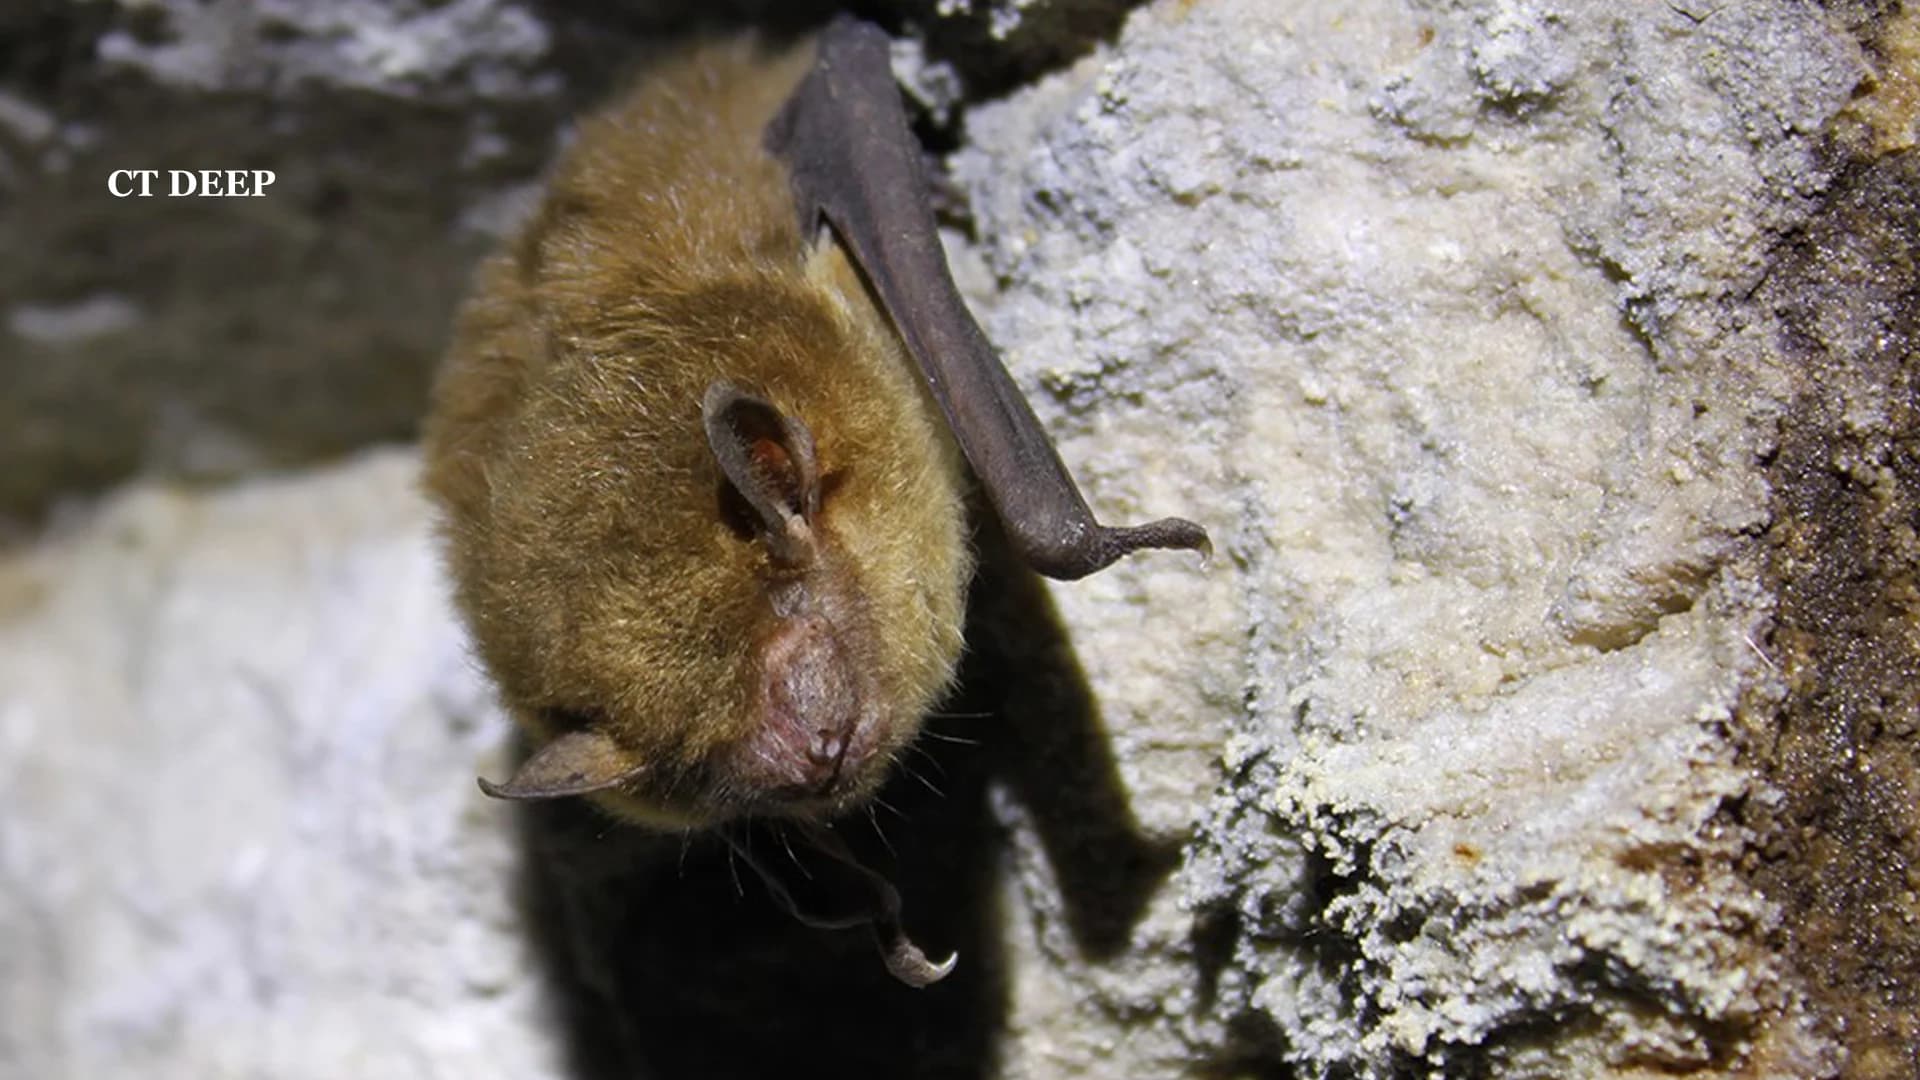 Connecticut celebrates Bat Week through Halloween as part of conservation effort   